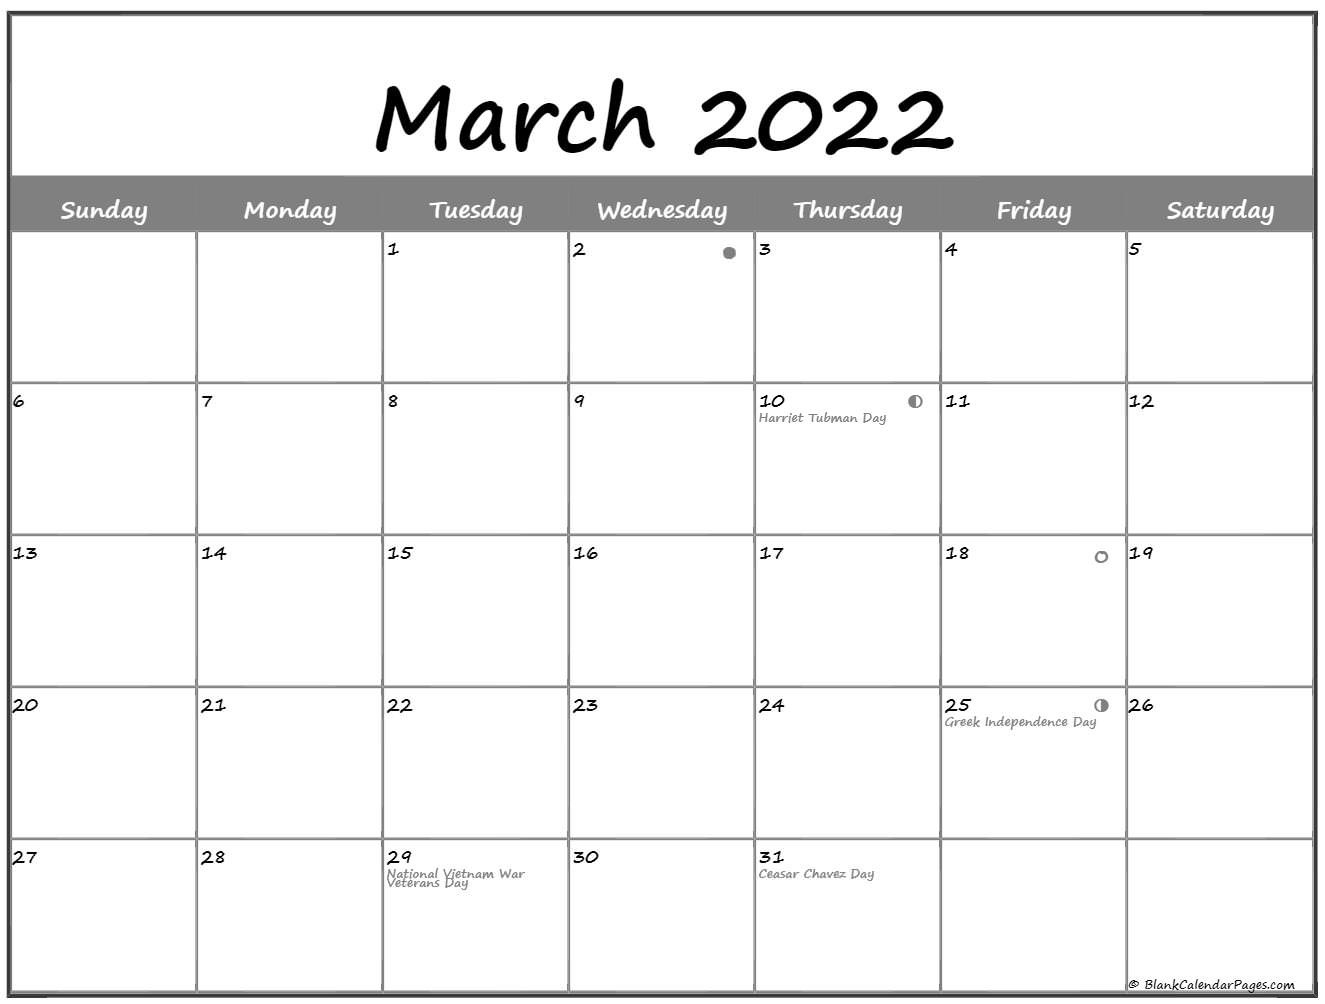 March 2022 Lunar Calendar | Moon Phase Calendar  Year Calendar April 2022 To March 2022